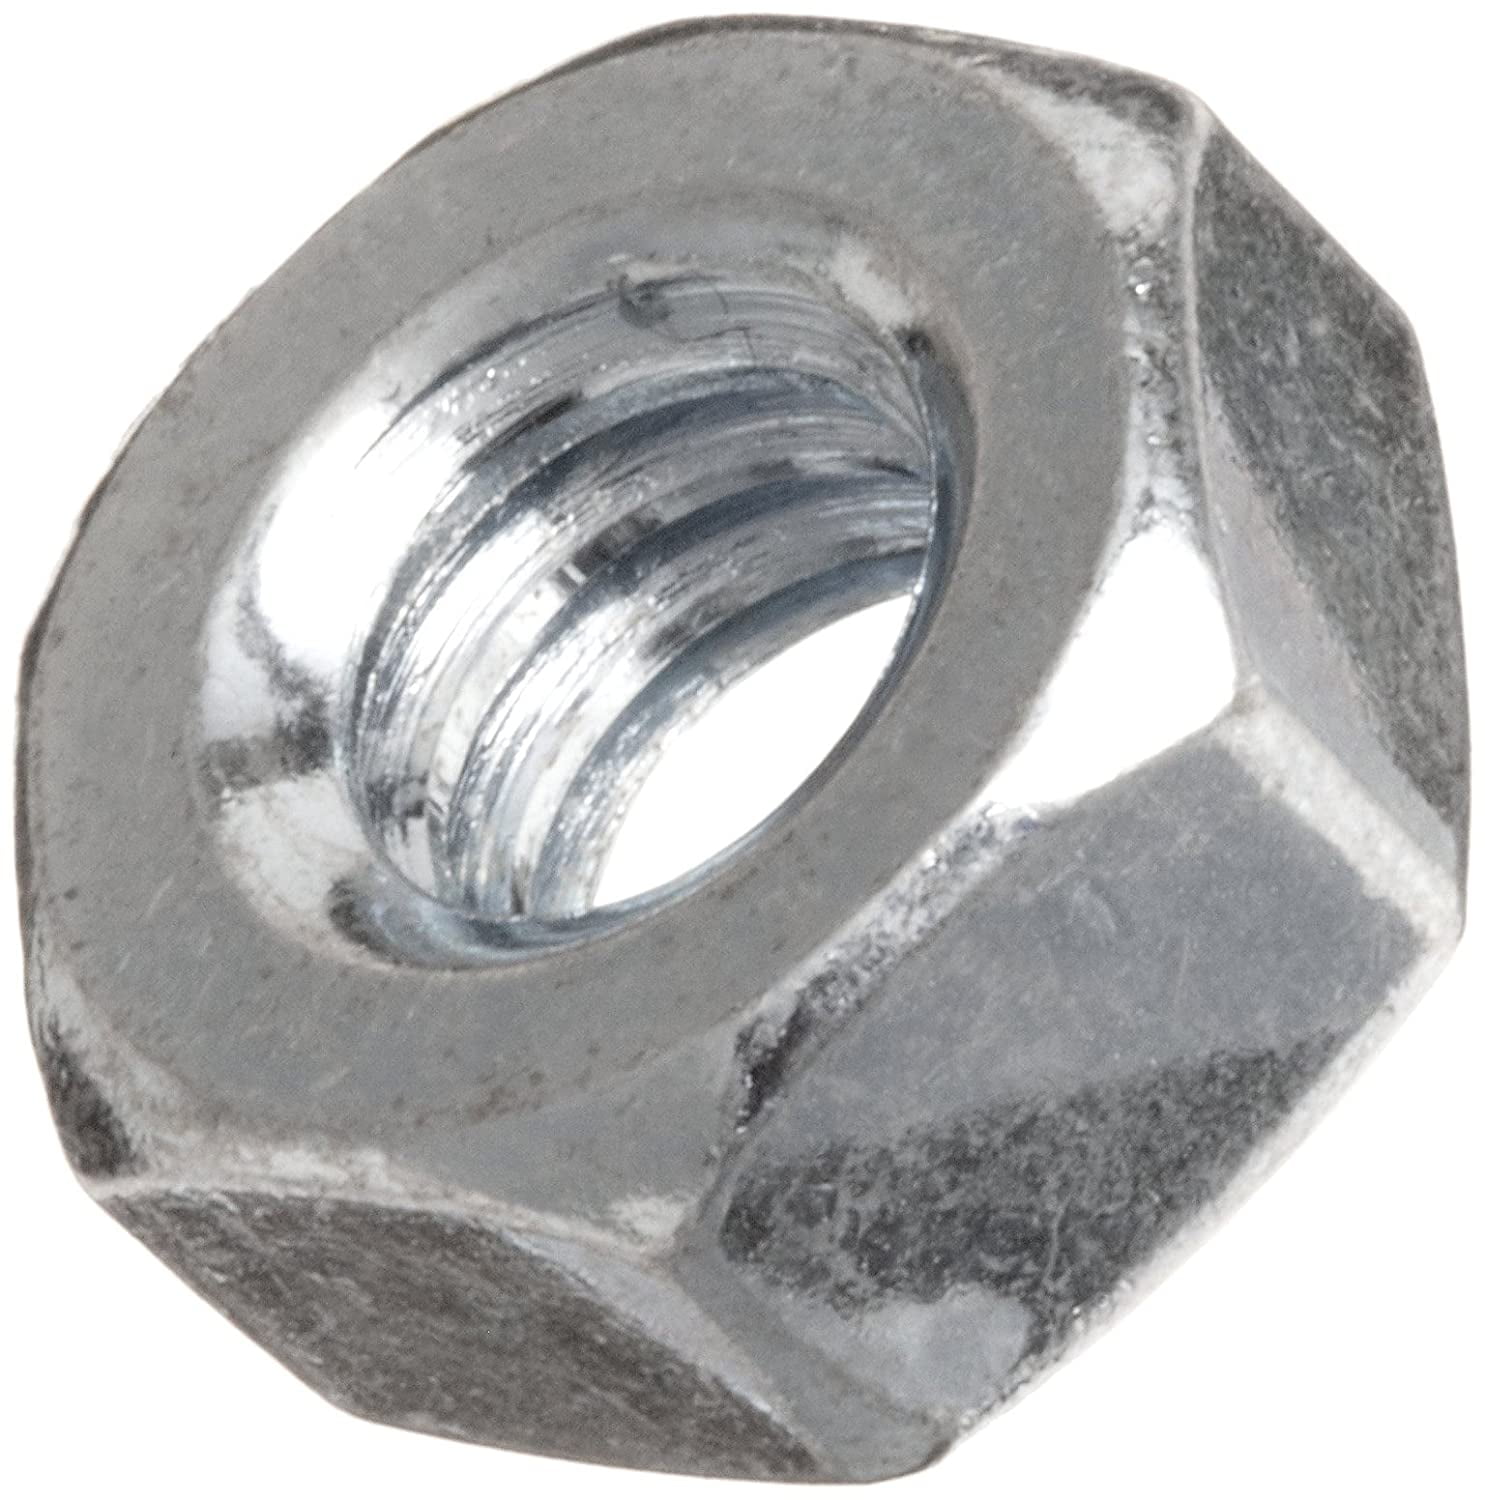 Qty-100 5/16"-18 UNC Coarse Thread Wing Nut Zinc Plated Steel Nuts 